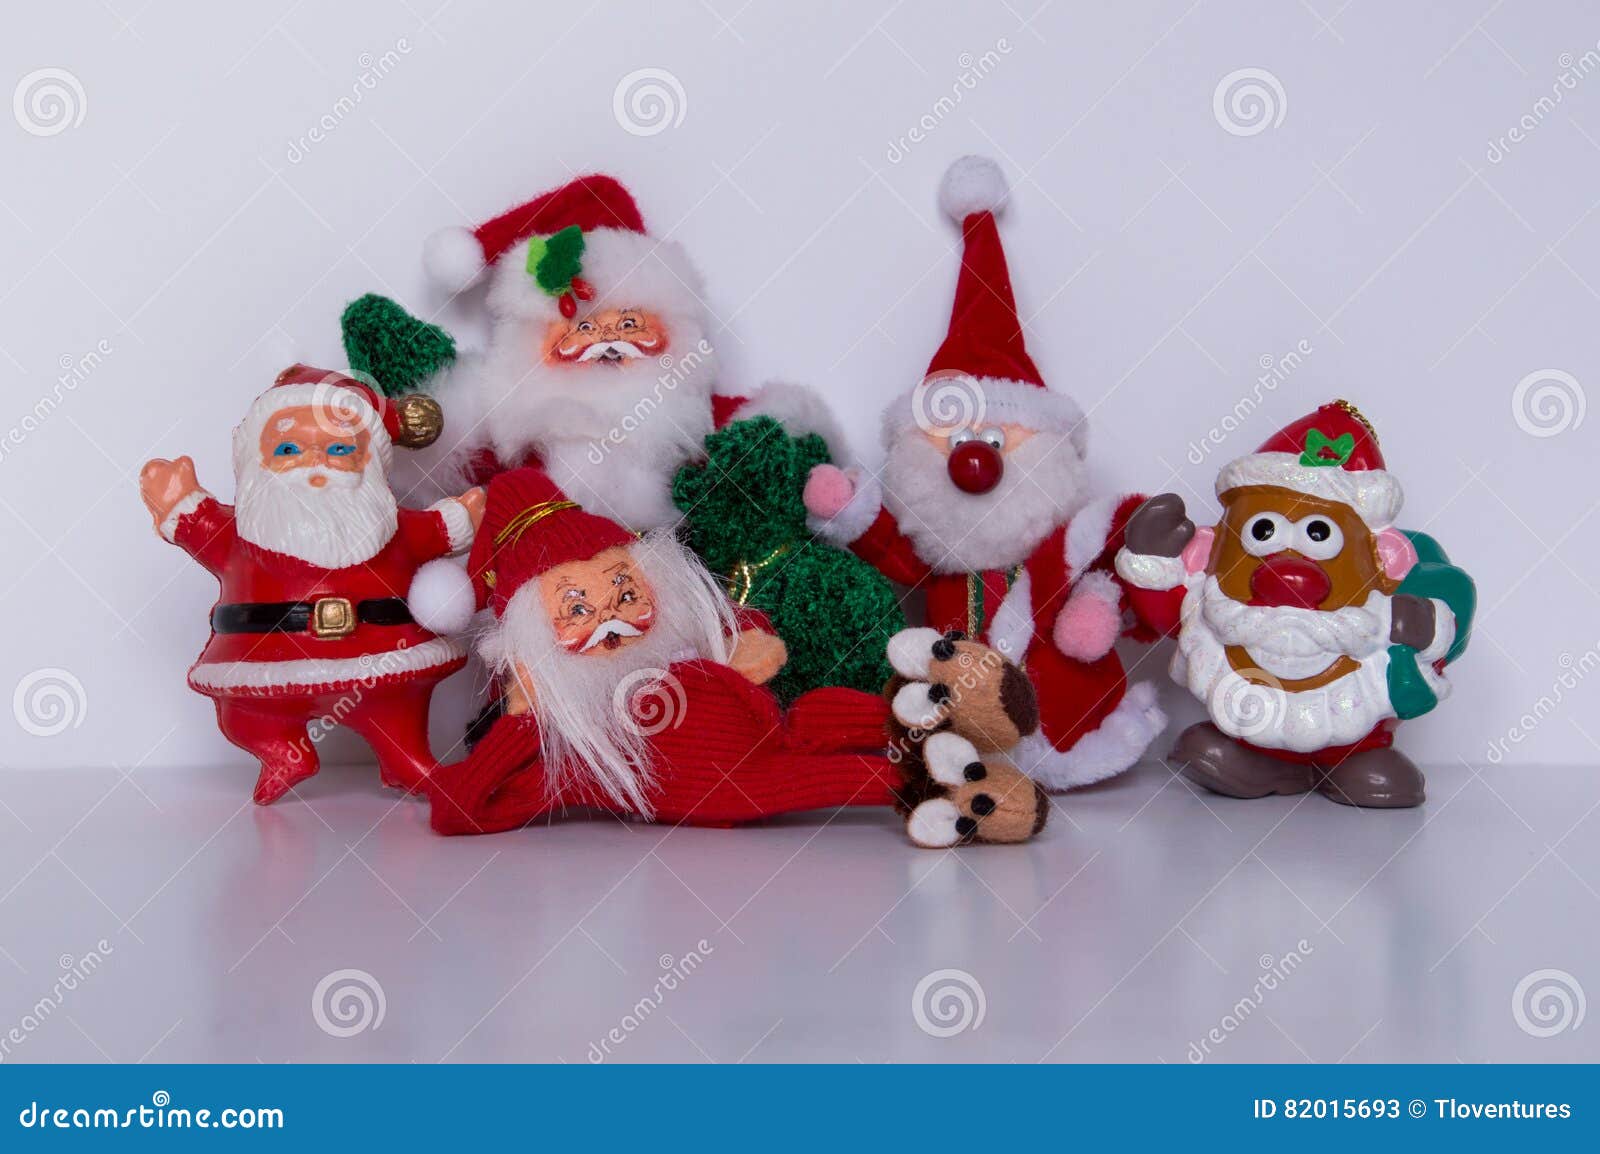 Santa Lying on His Side with Mr. Potato Head Santa on Right Stock Image ...